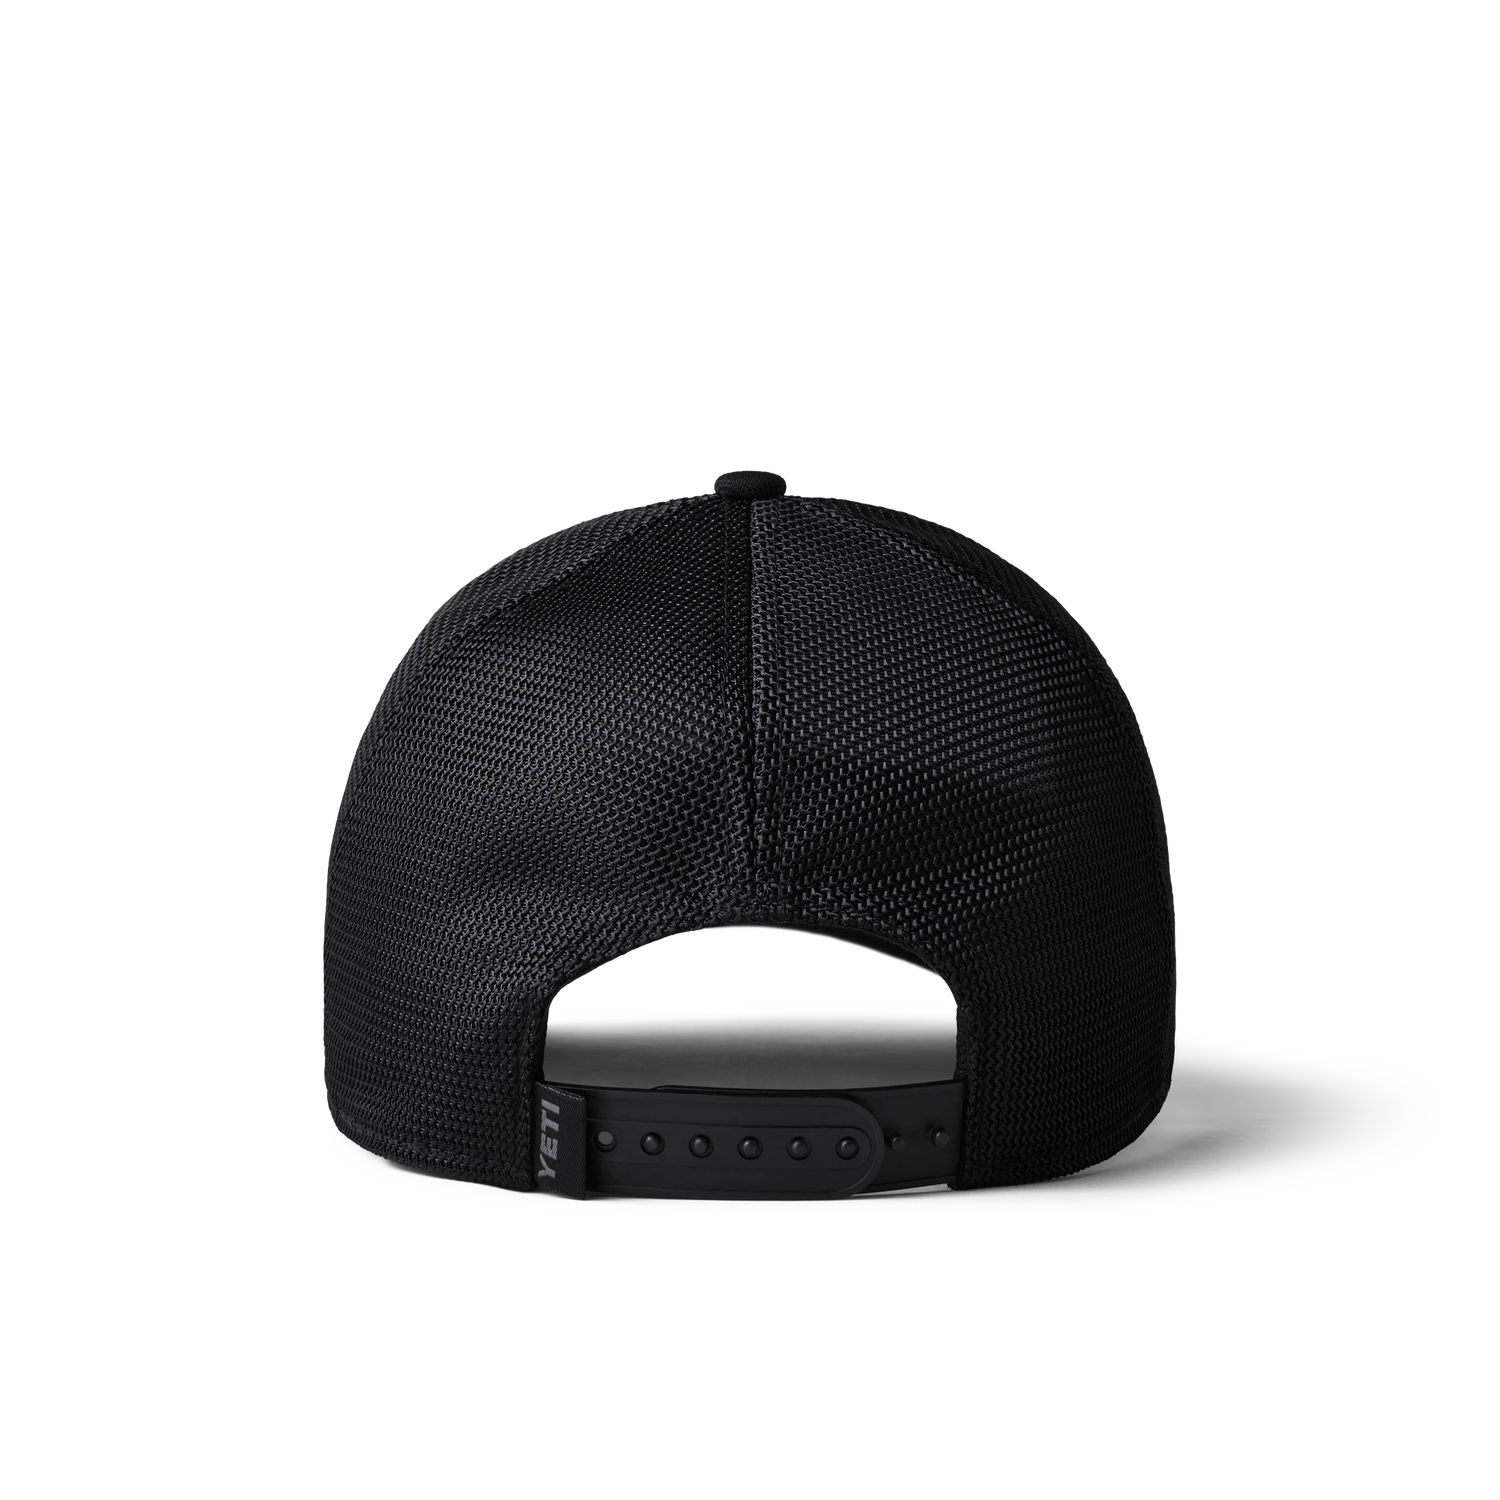 YETI Low Pro Trucker Hat Black on Black Black/Black